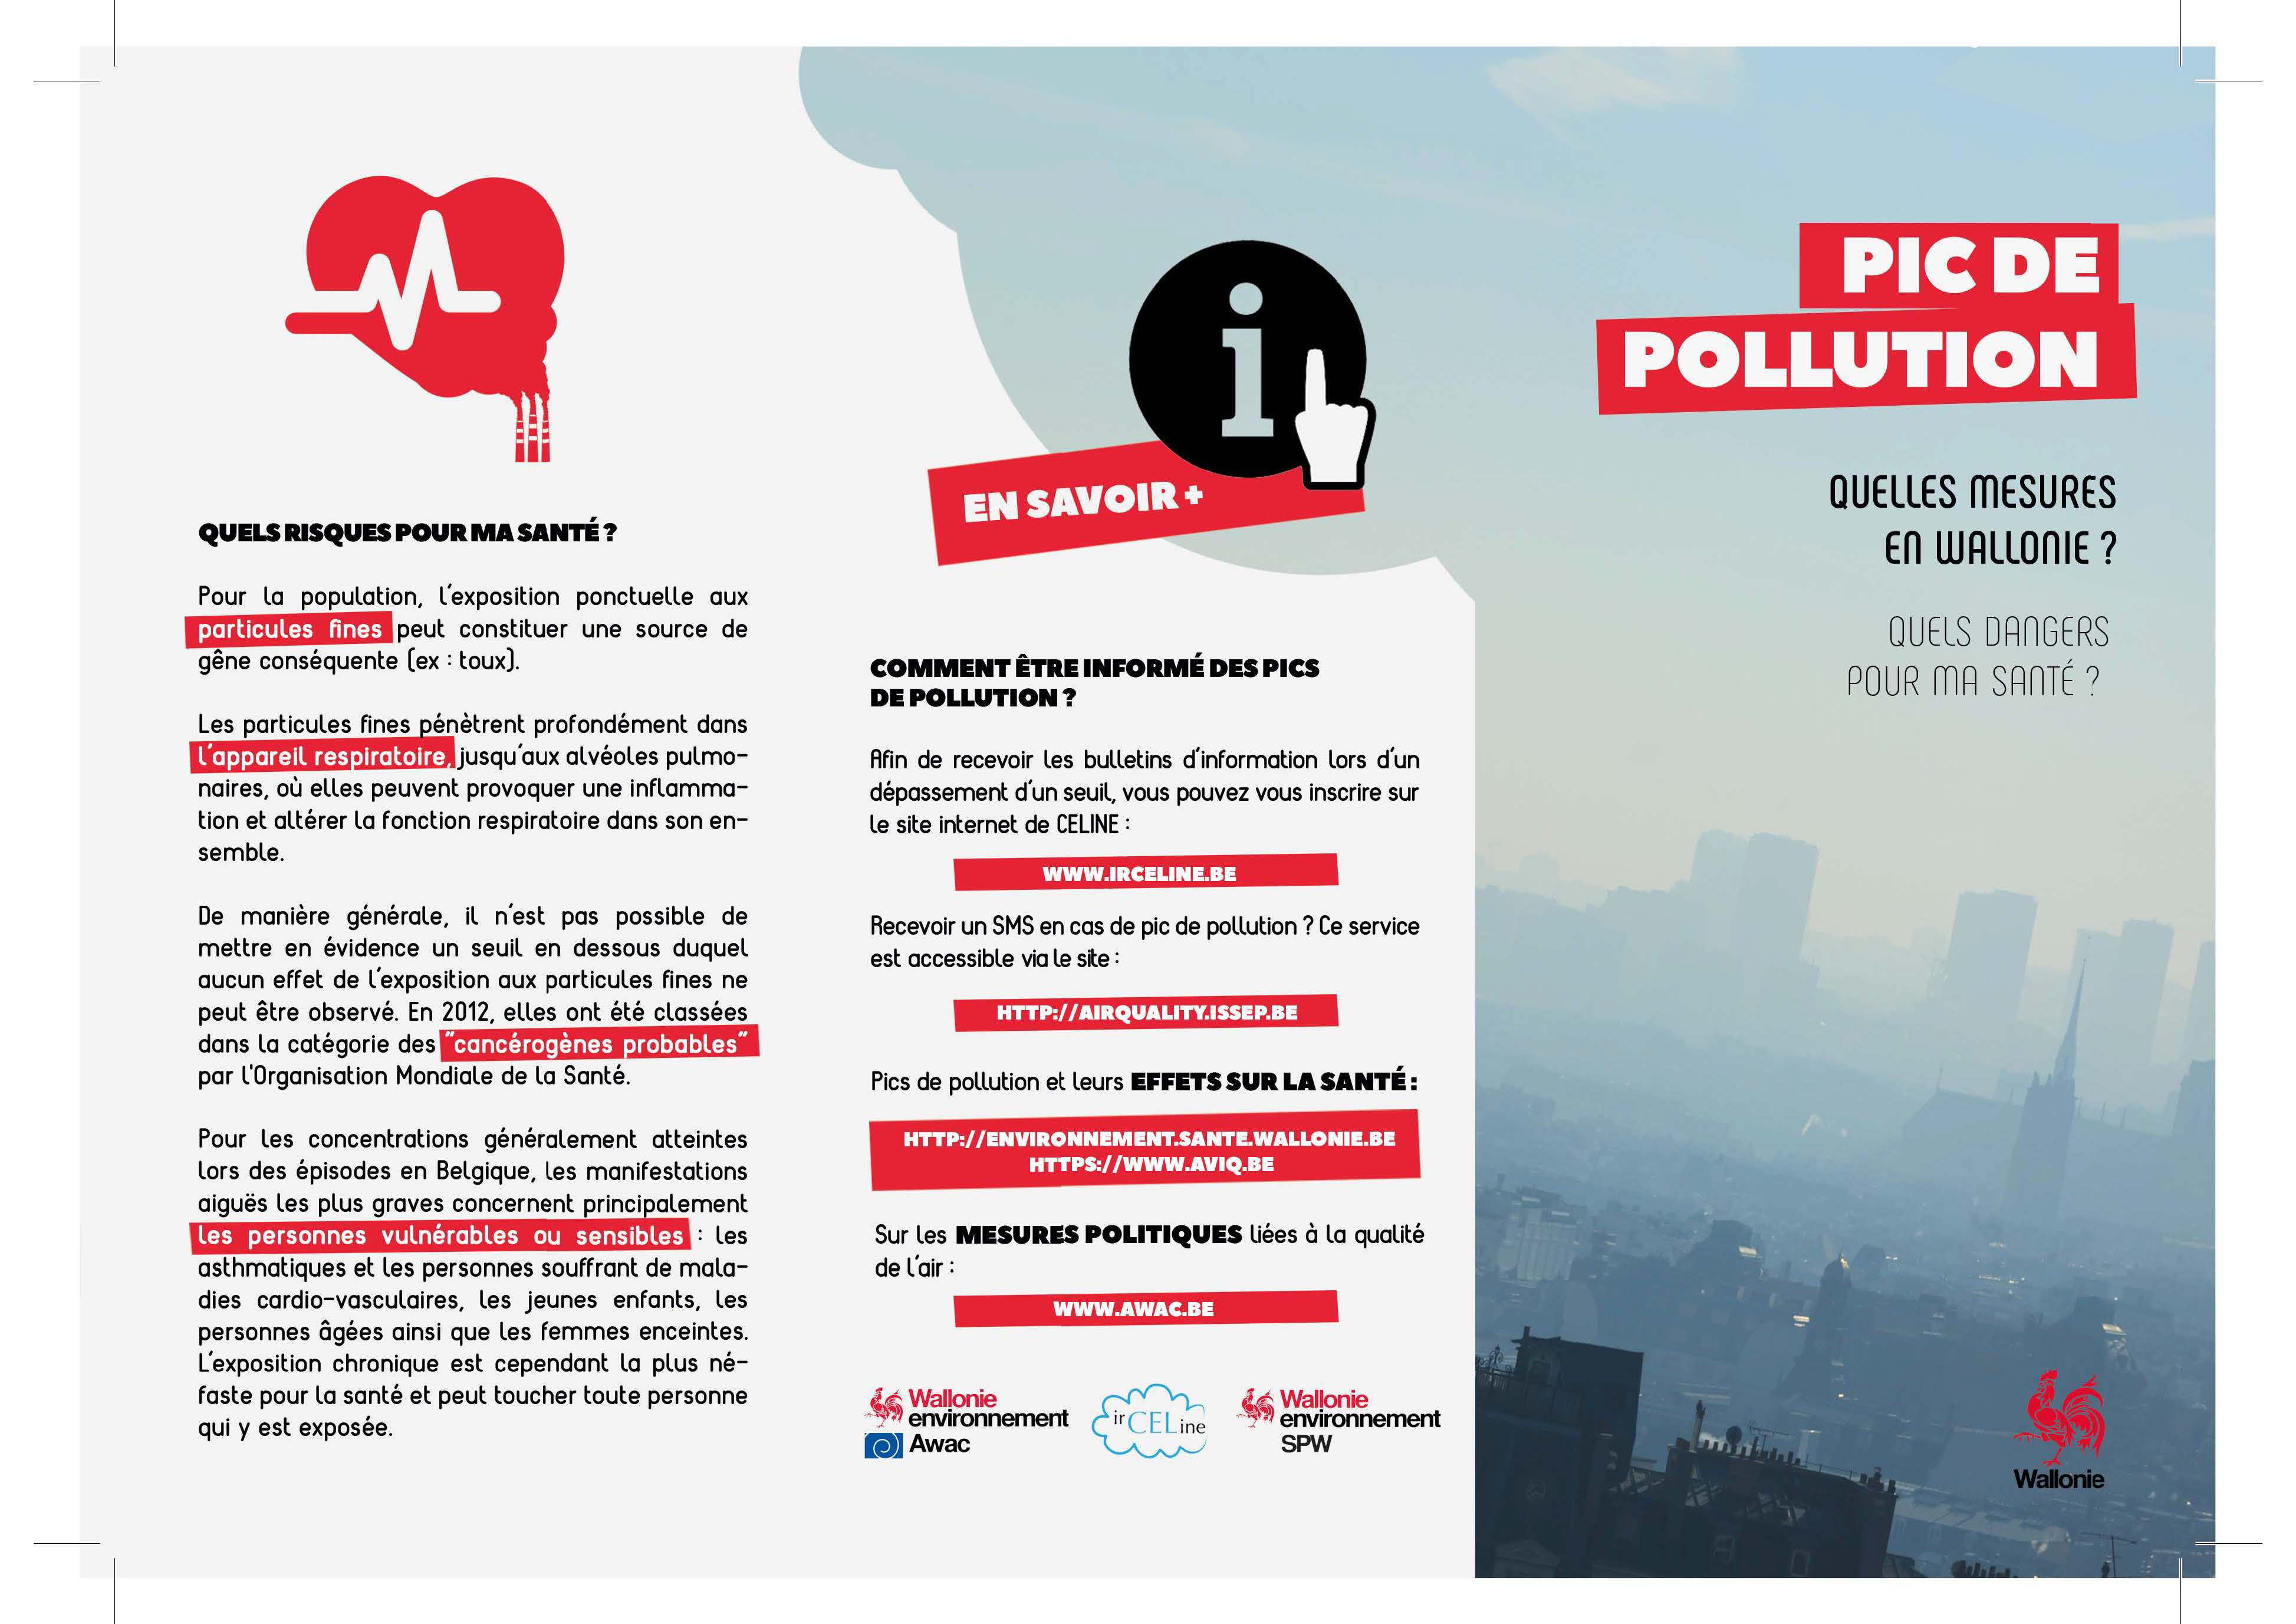 Pic_de_pollution_Page_1.jpg